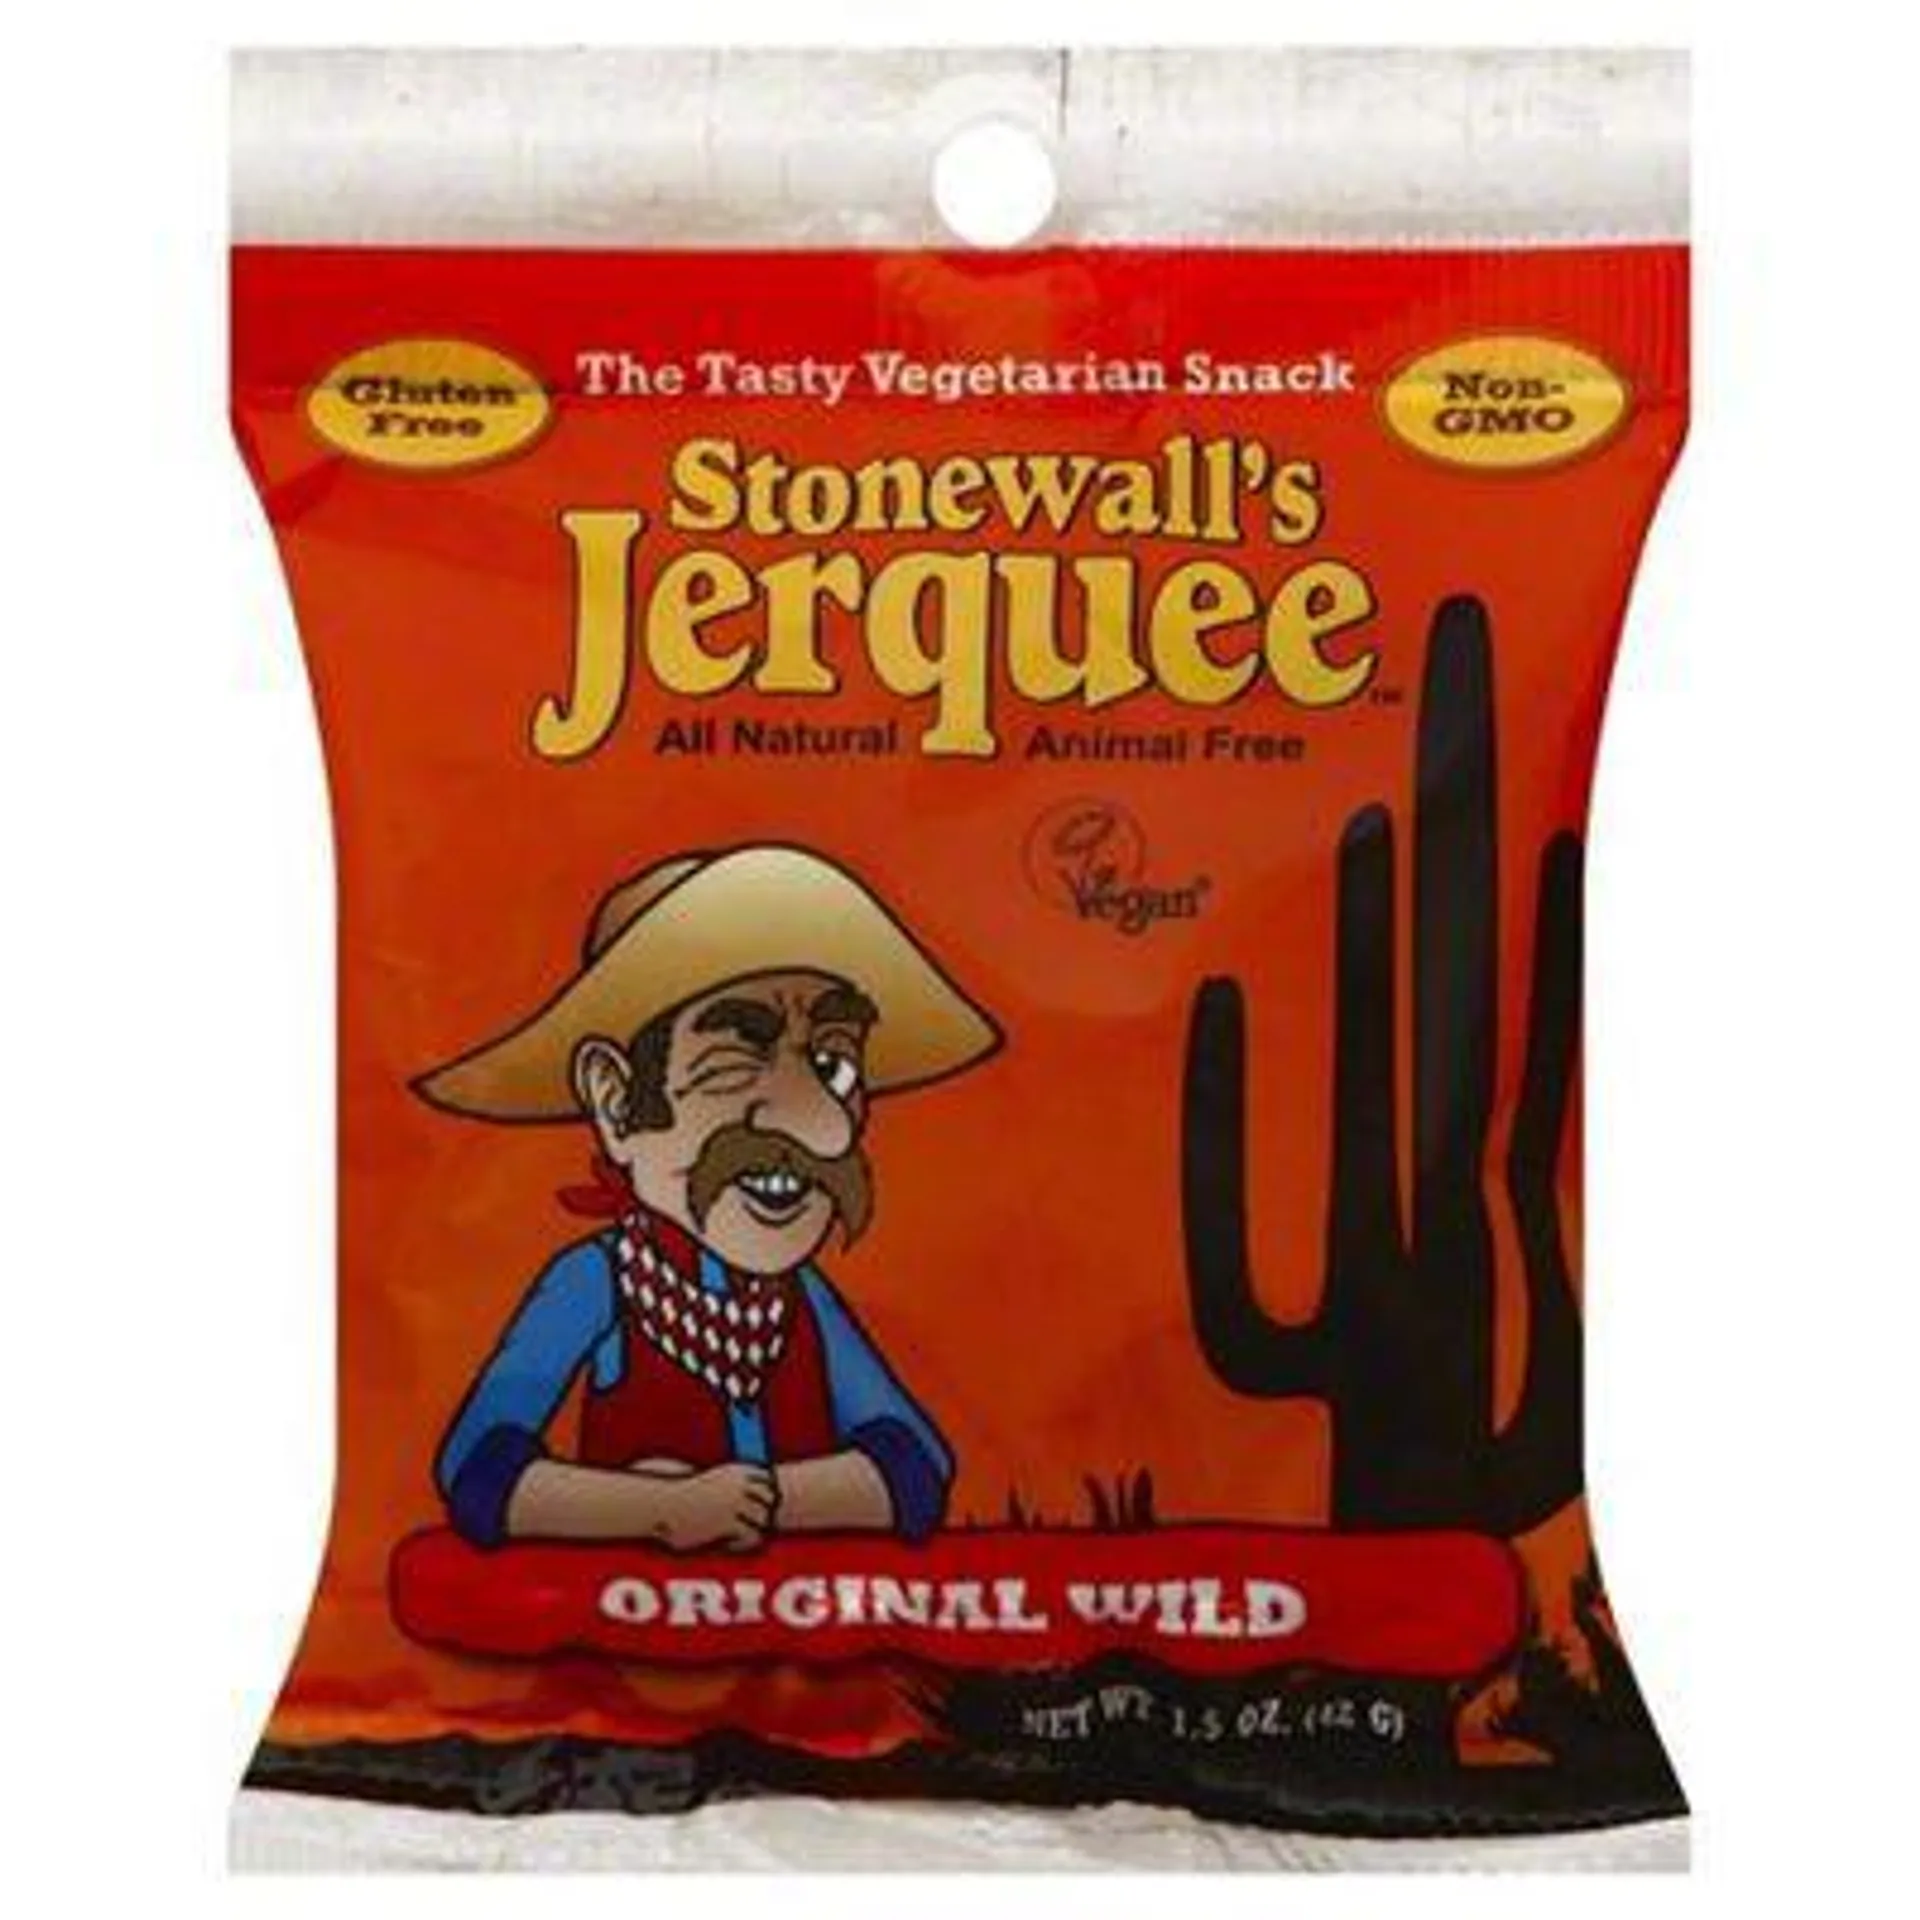 Stonewall's Jerquee Original Wild Vegan Jerky